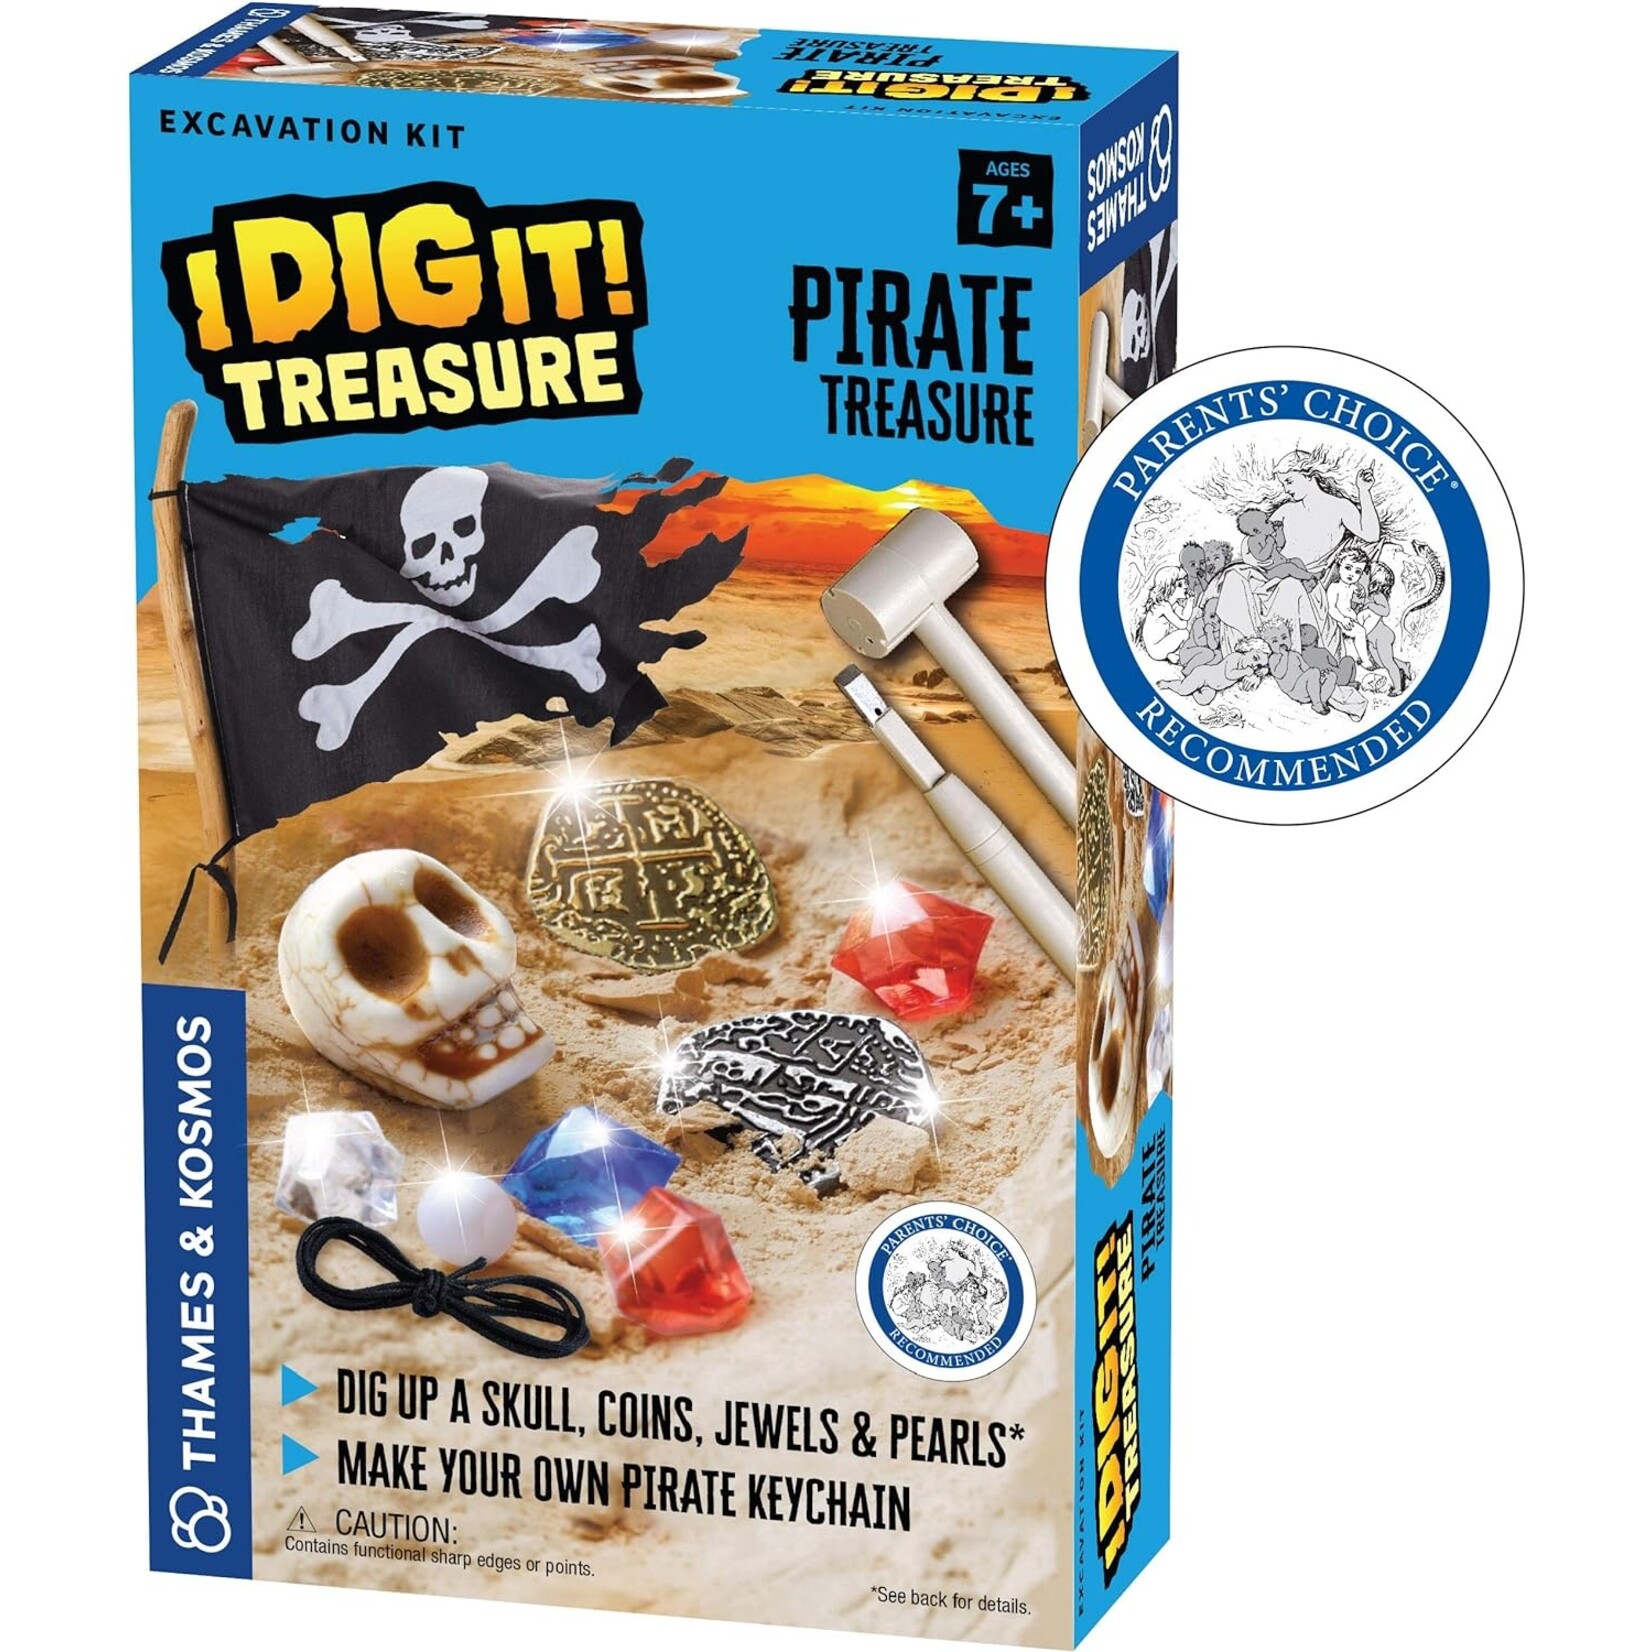 Thames & Kosmos I Dig It! Treasure - Pirate Treasure